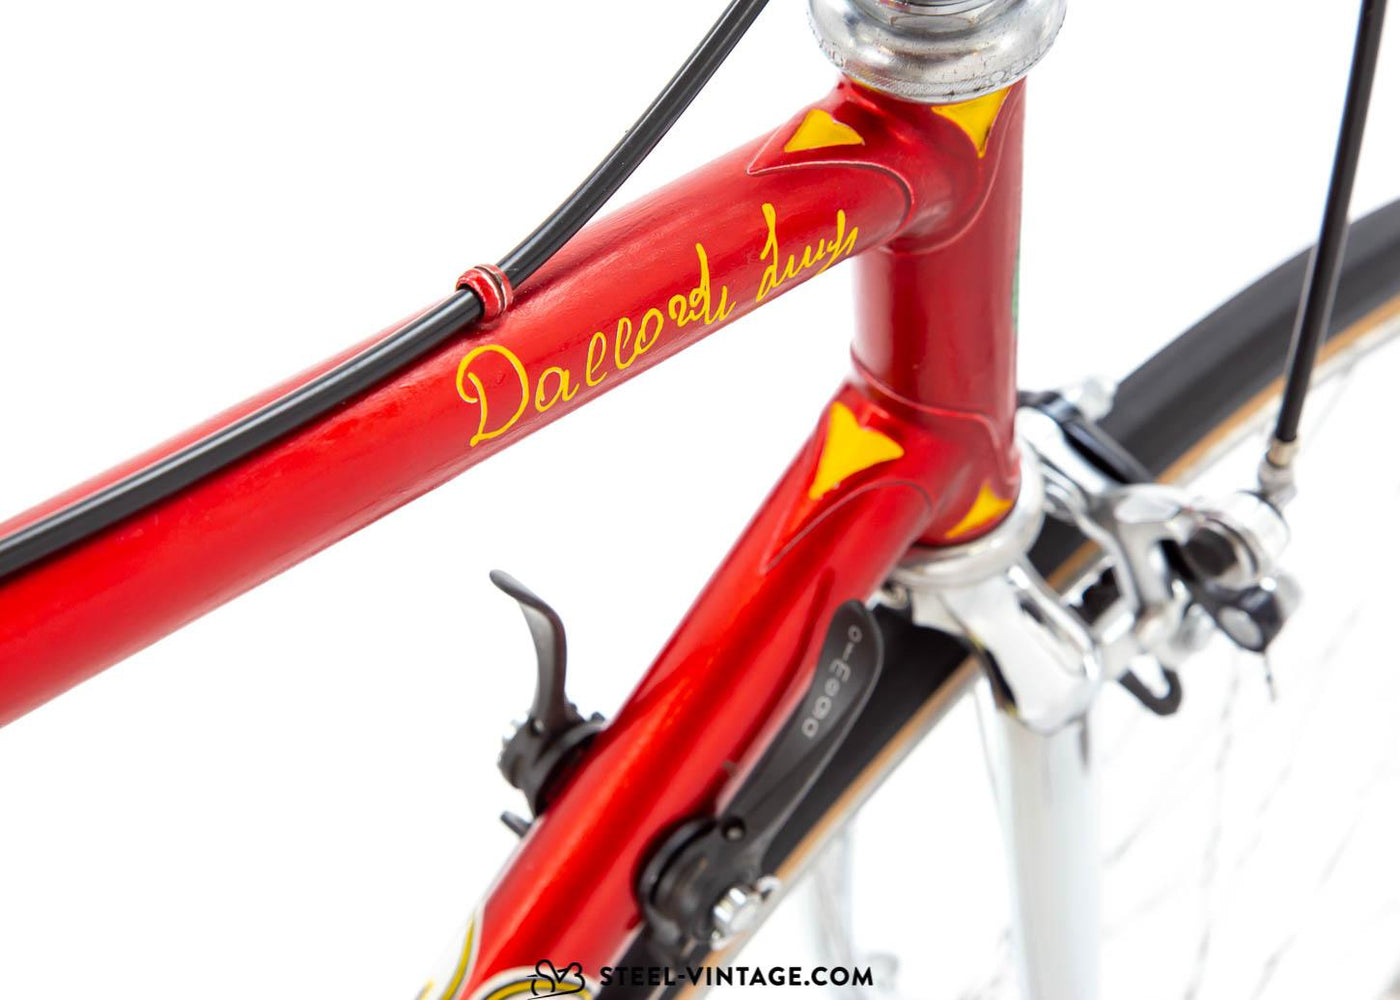 Daccordi Mistral Classic Road Bicycle 1980s - Steel Vintage Bikes